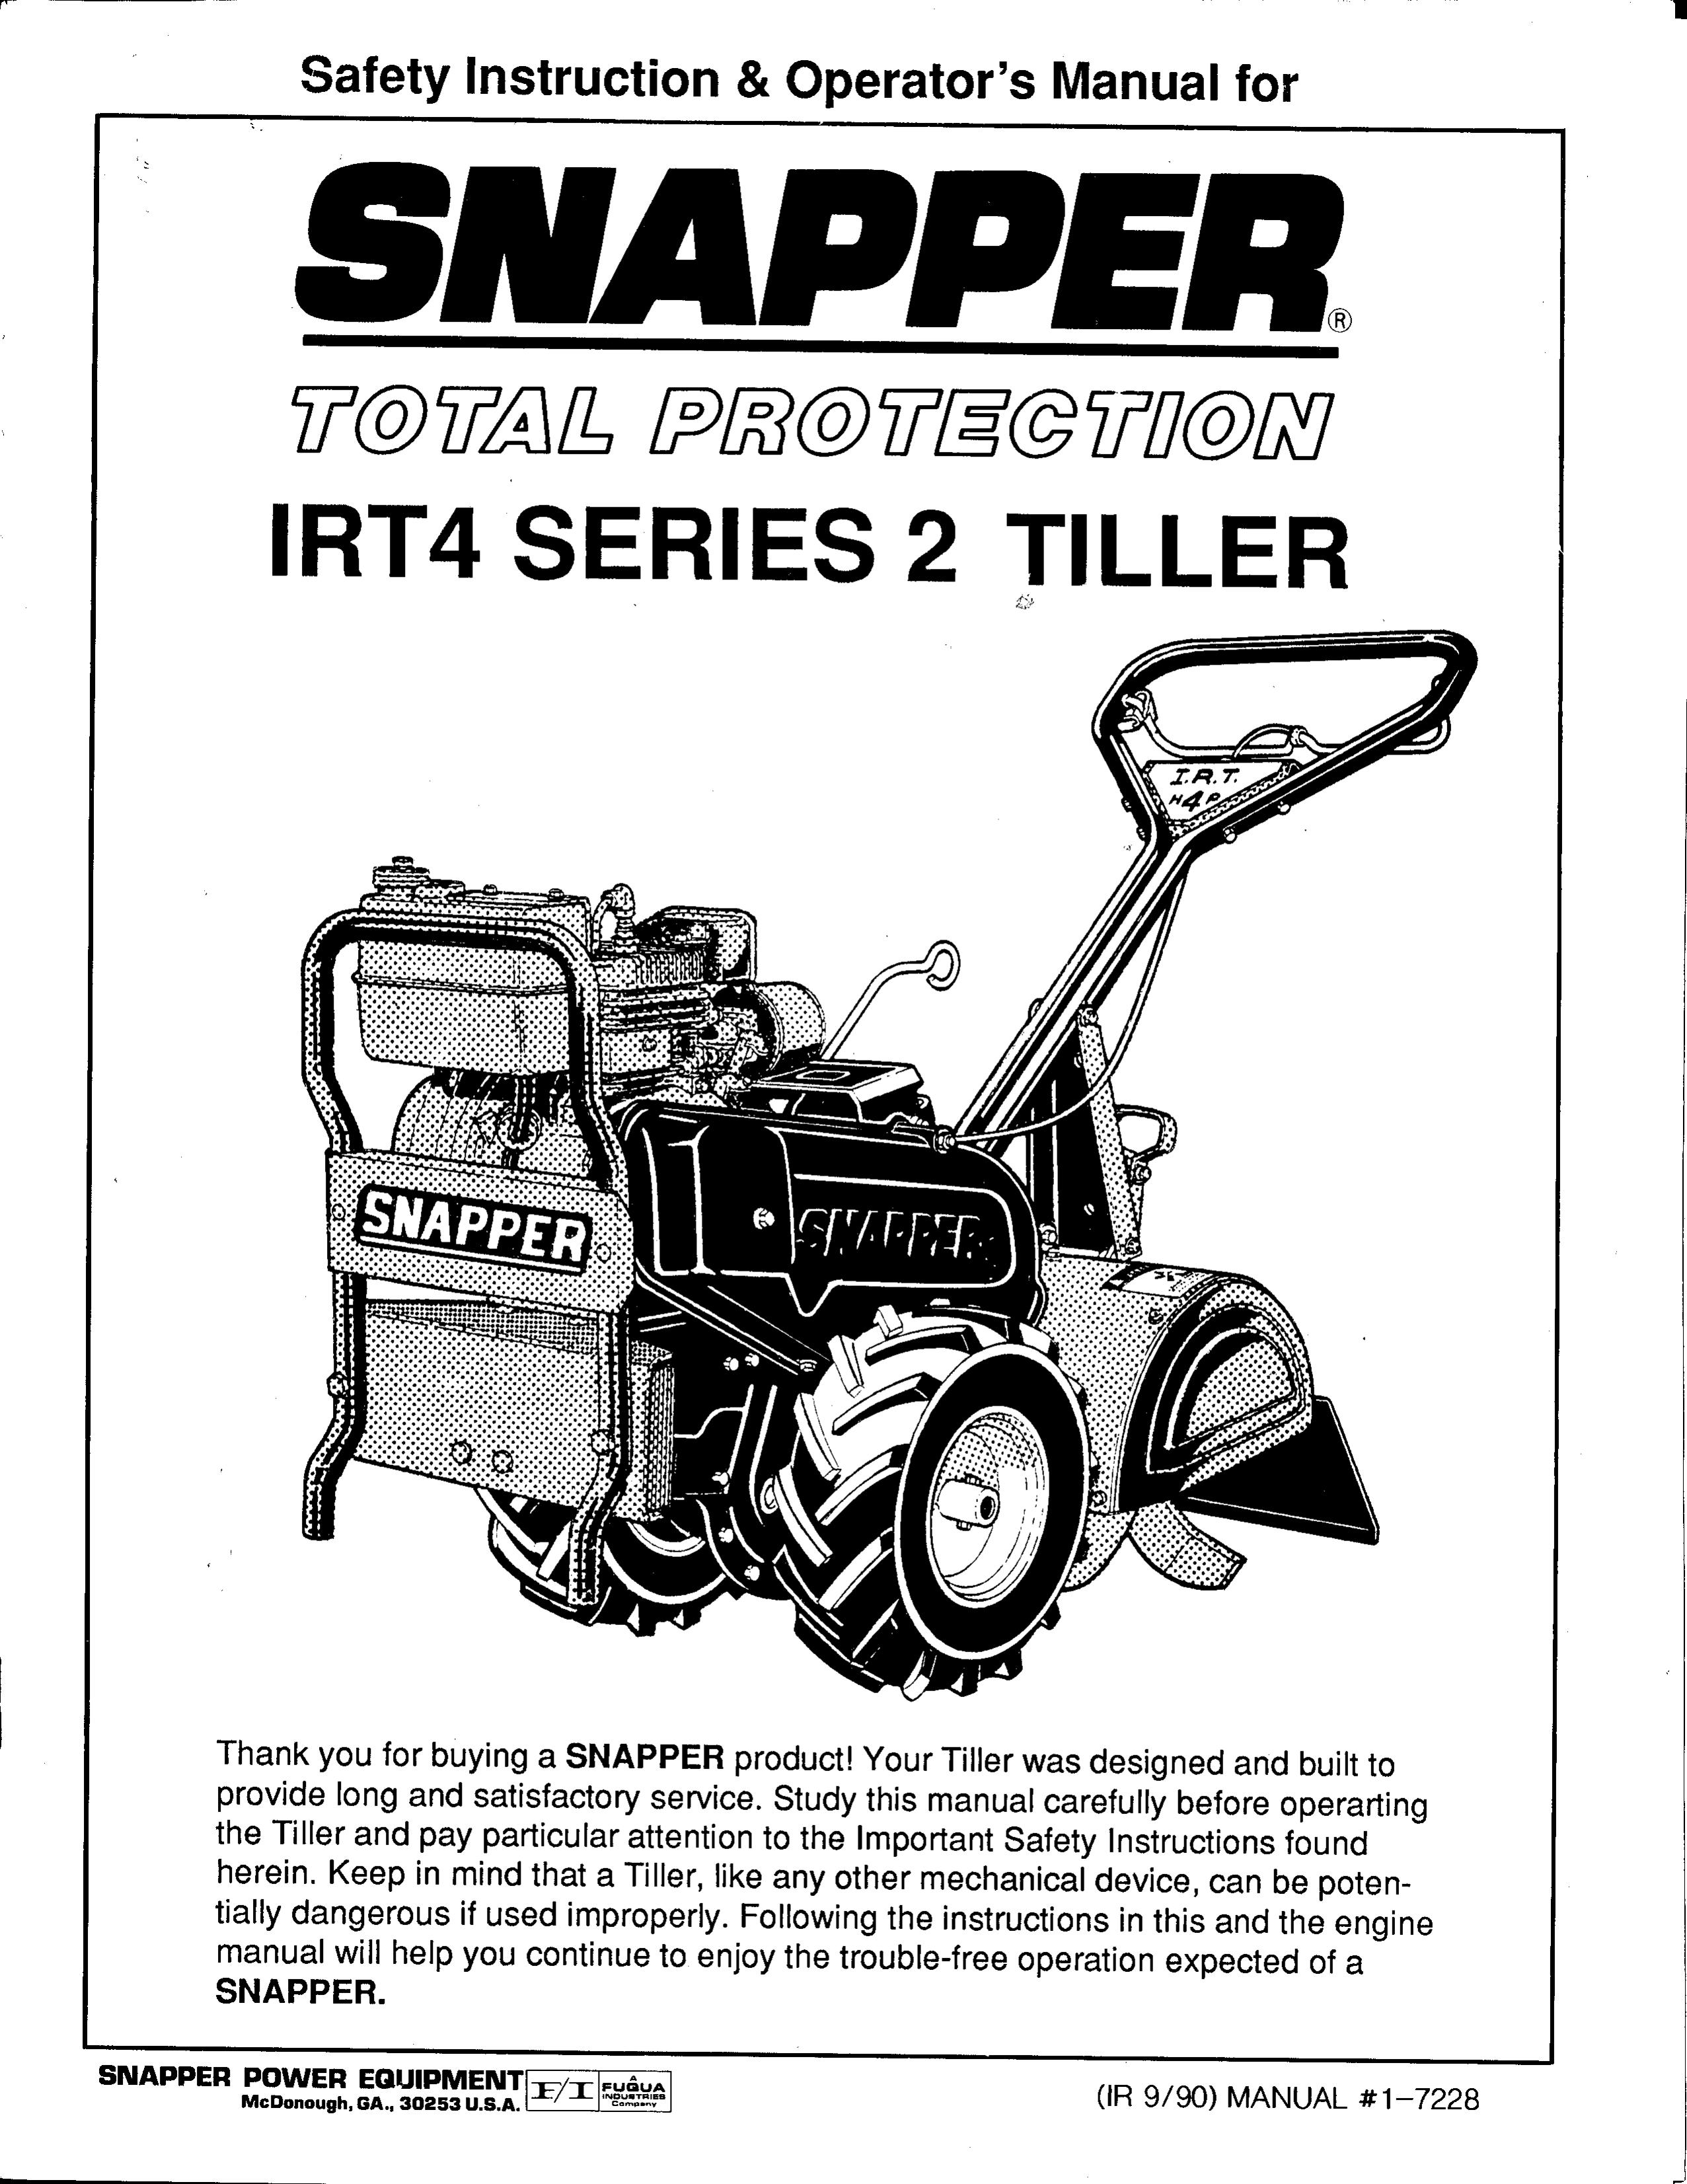 Snapper IRT4 Series 2 Tiller User Manual